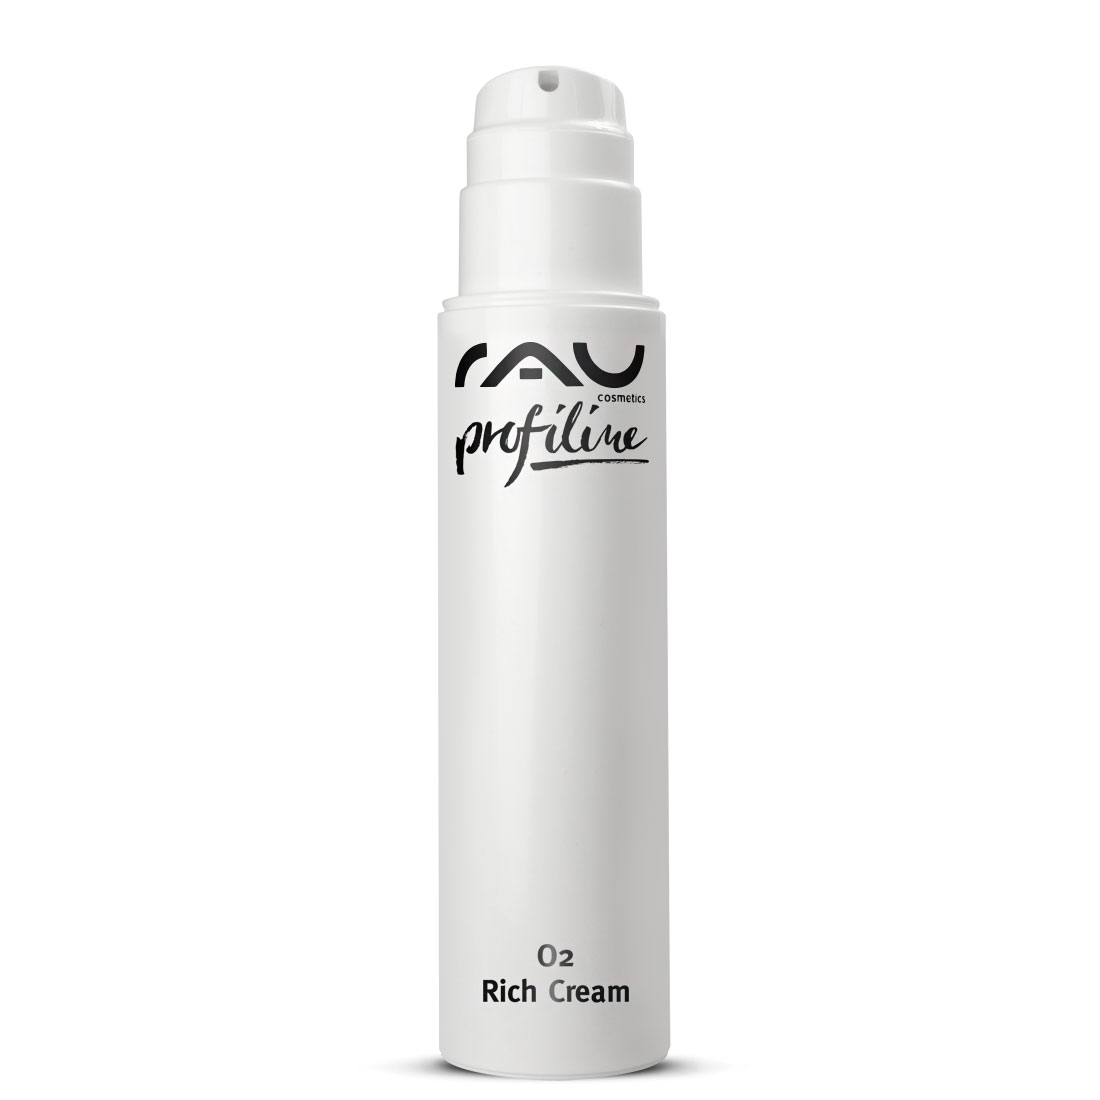 RAU O2 Rich Cream 200 ml PROFILINE - Kabinenware - reichhaltige Creme mit Aloe Vera & Ginkgo Gesichtscreme Unreine Haut Hautpflege Gesichtspflege Gesichtsreinigung